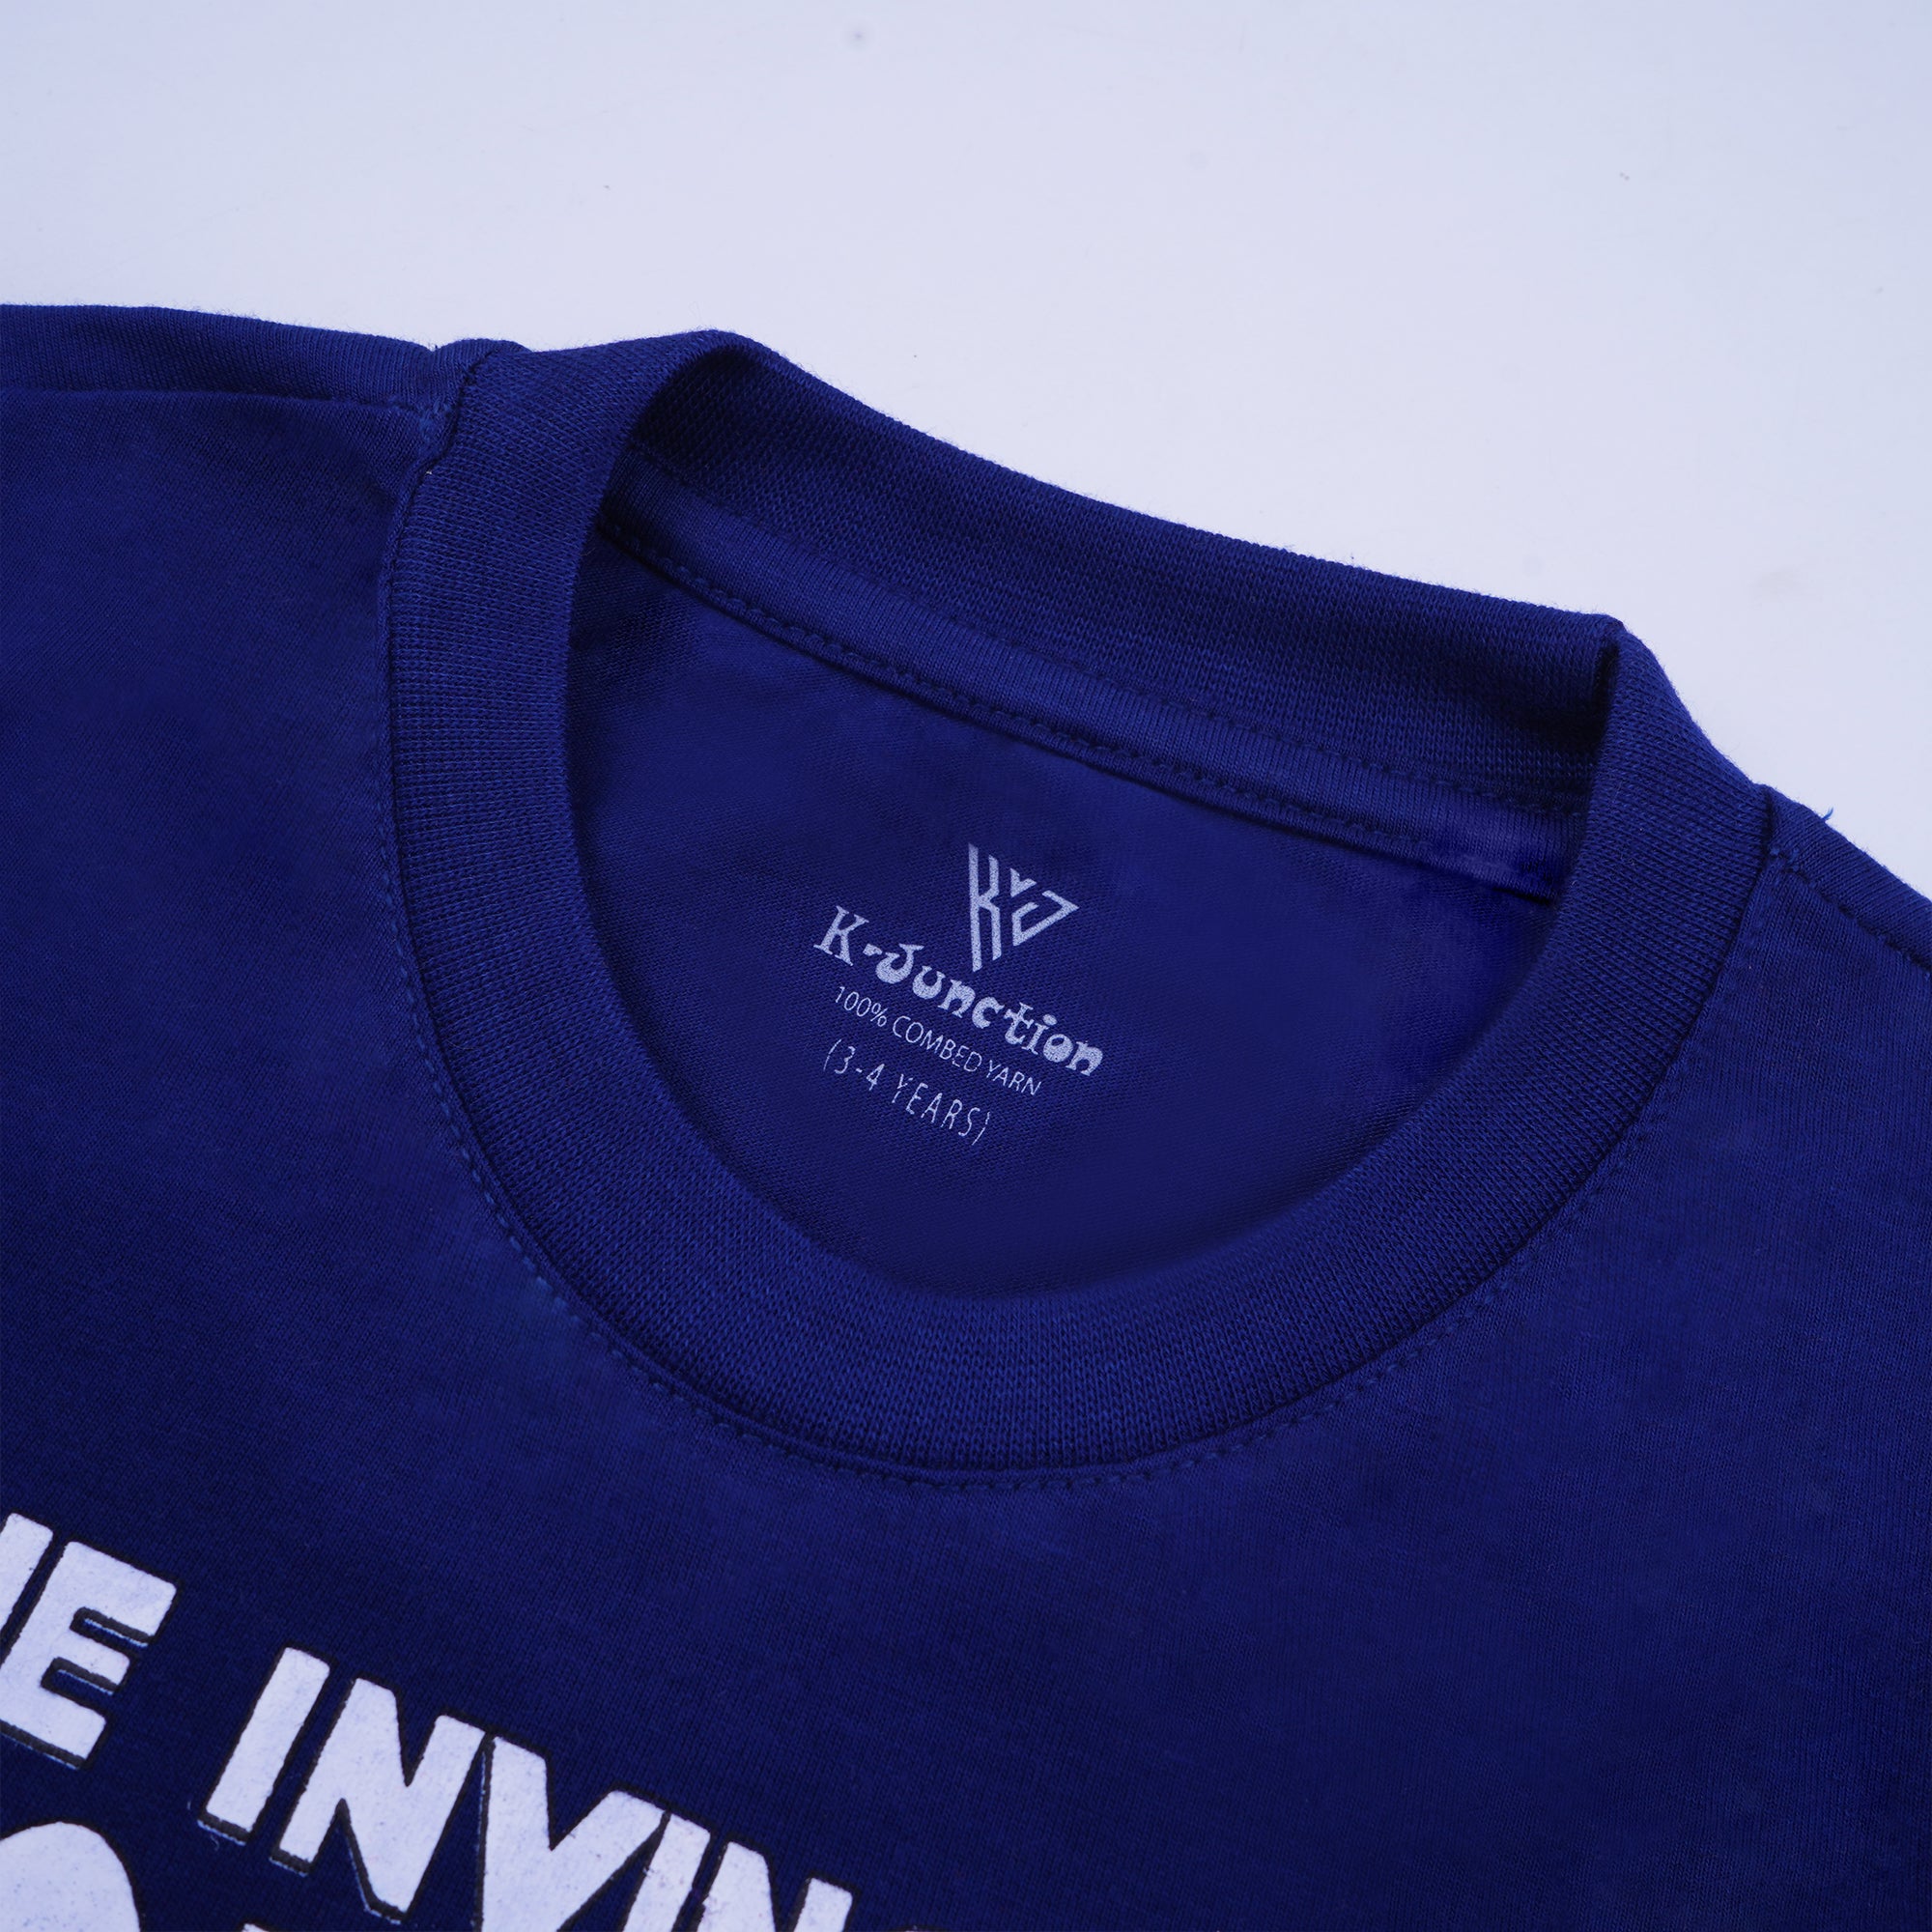 Boys Half Sleeves-Printed T-Shirt (Iron-man)